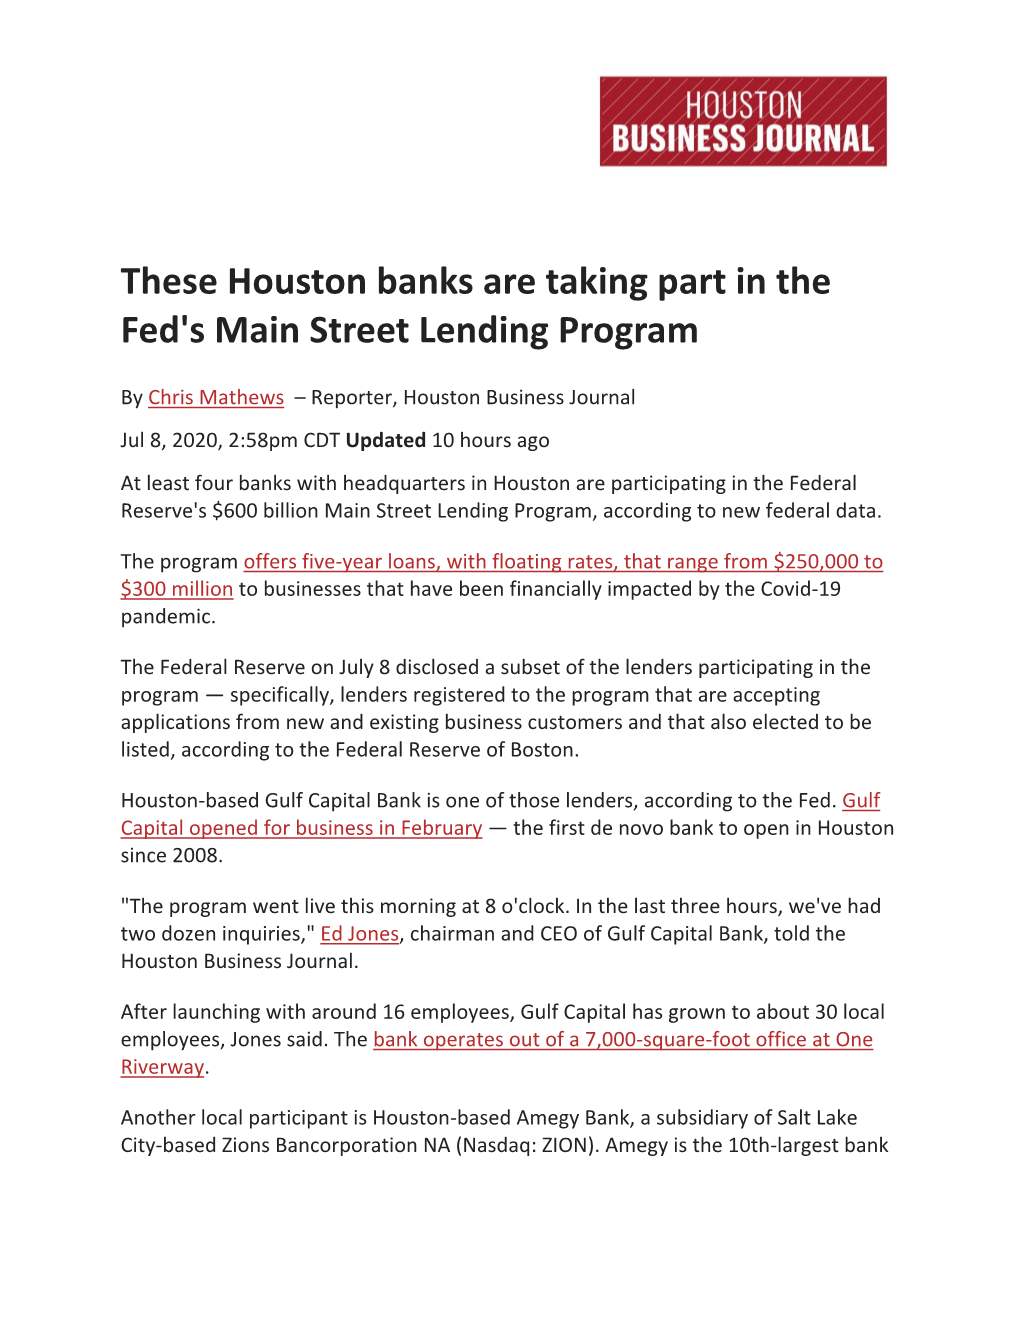 These Houston Banks Are Taking Part in the Fed's Main Street Lending Program